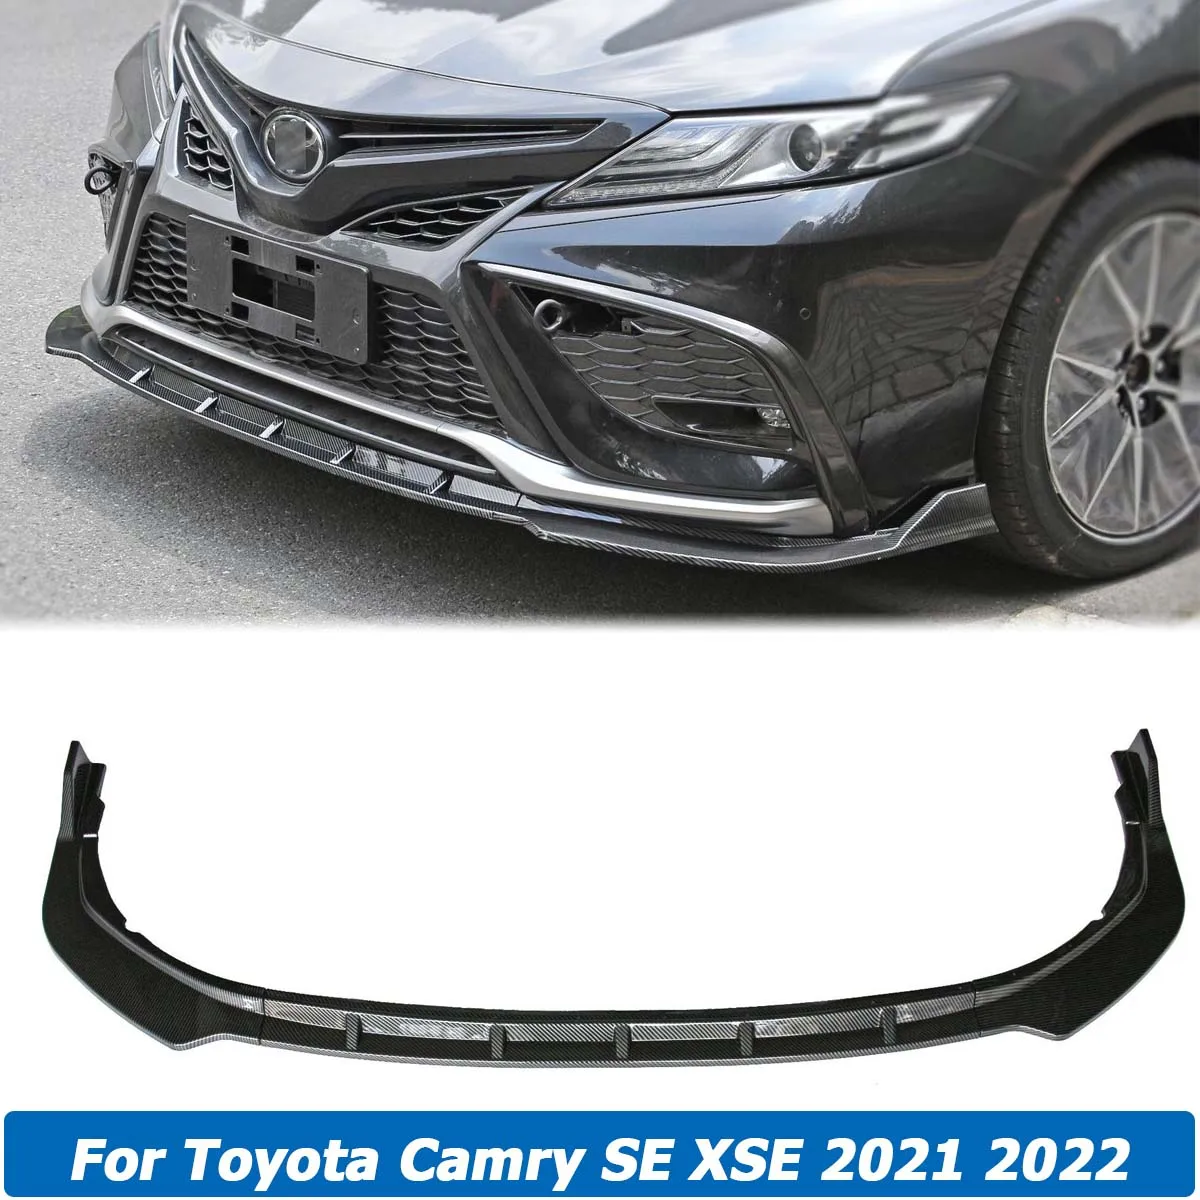 

For Toyota Camry SE XSE Sport 2021 2022 Front Bumper Lip Spoiler Side Splitter Deflector Chin Body Kit Guard Car Accessories